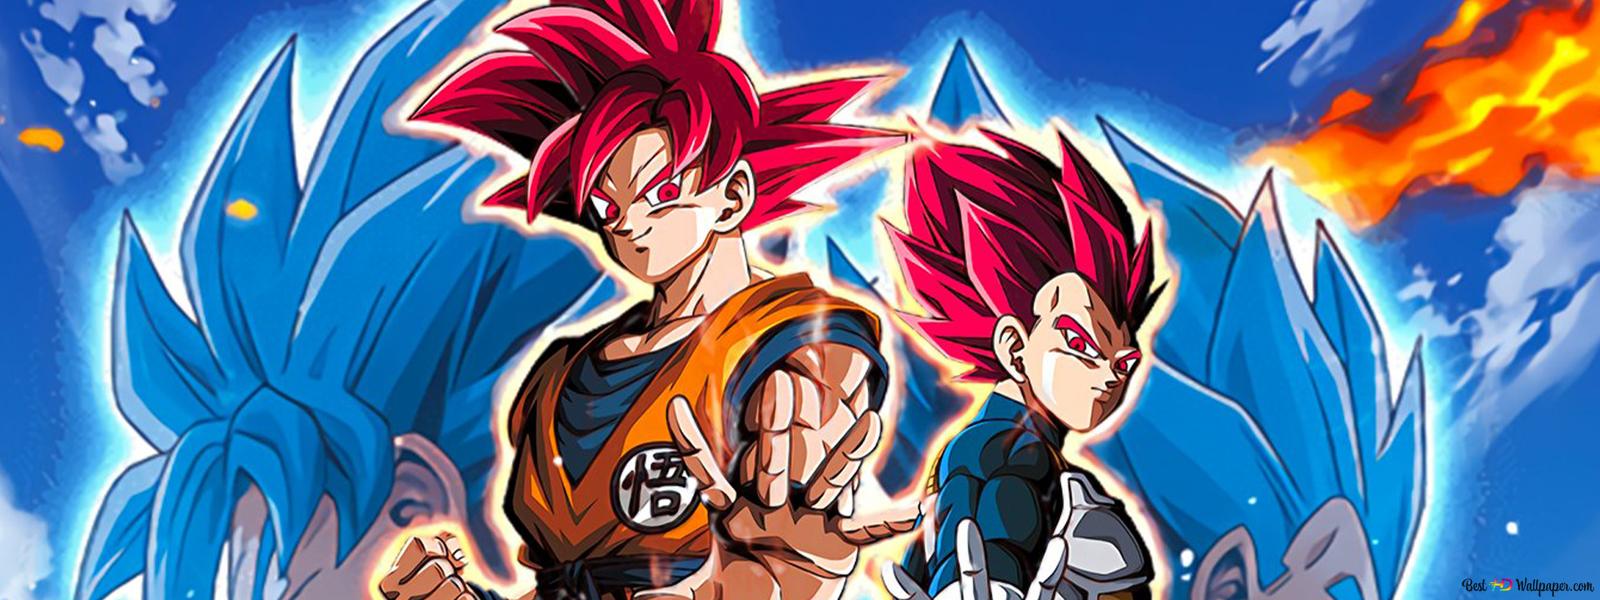 Super Saiyan God Goku & Vegeta from Dragon Ball Super: Super Broly [Dragon Ball Z Dokkan Battle Art] HD wallpaper download